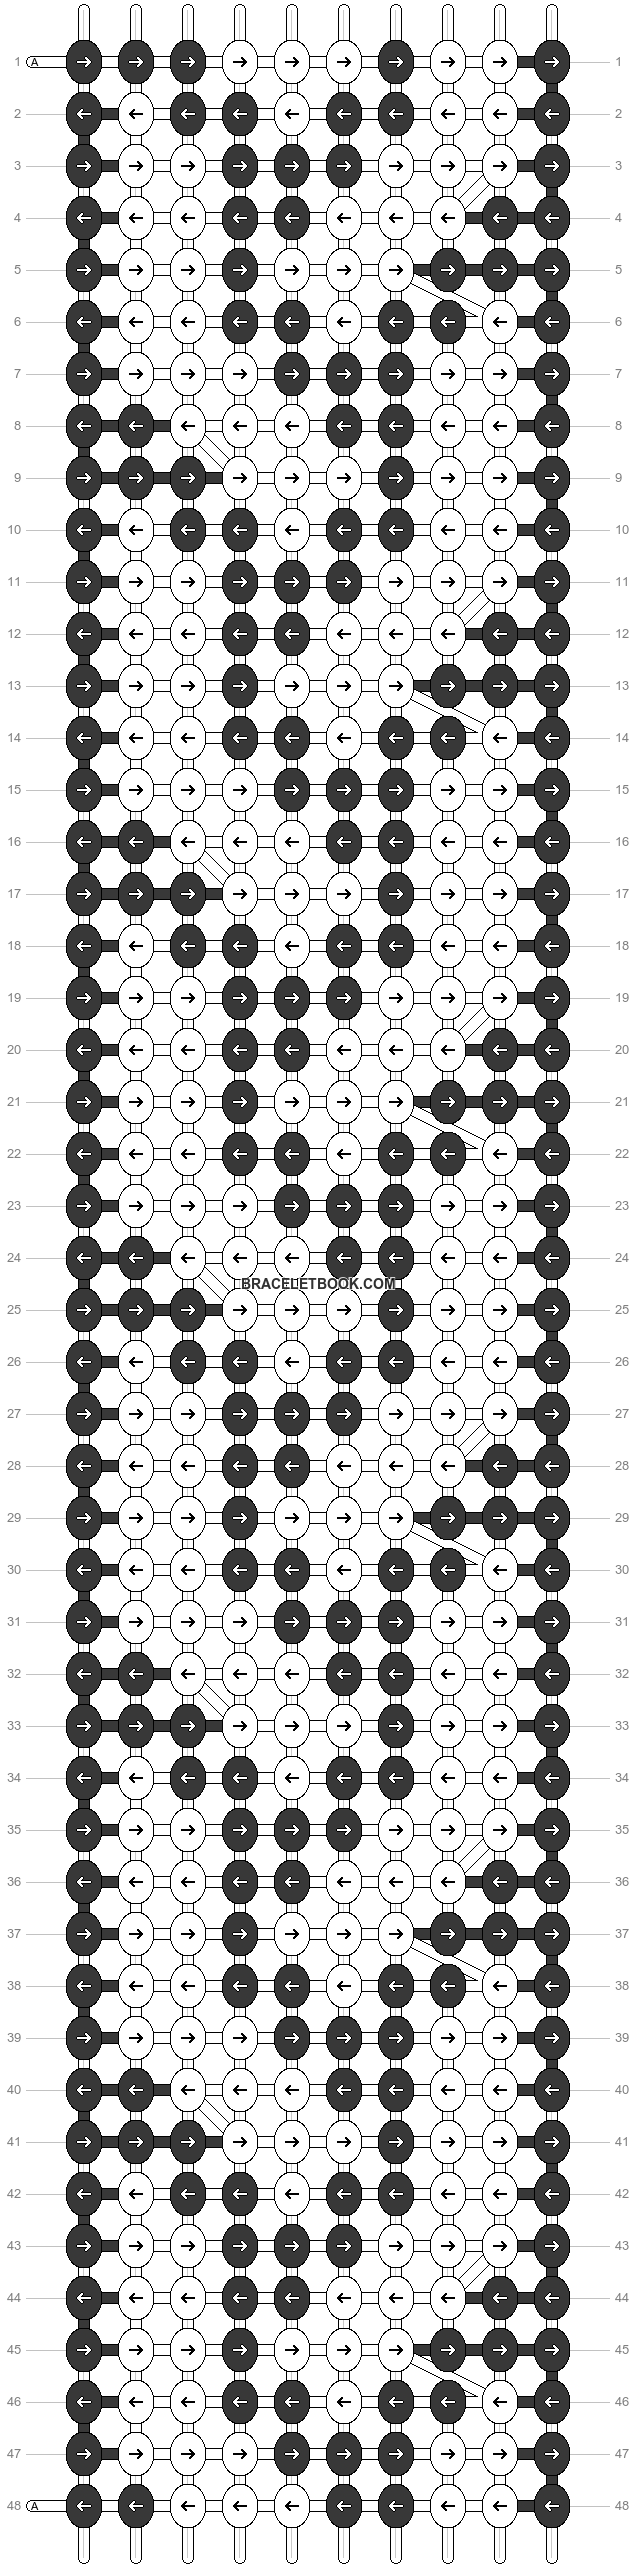 Alpha pattern #51402 variation #107139 pattern